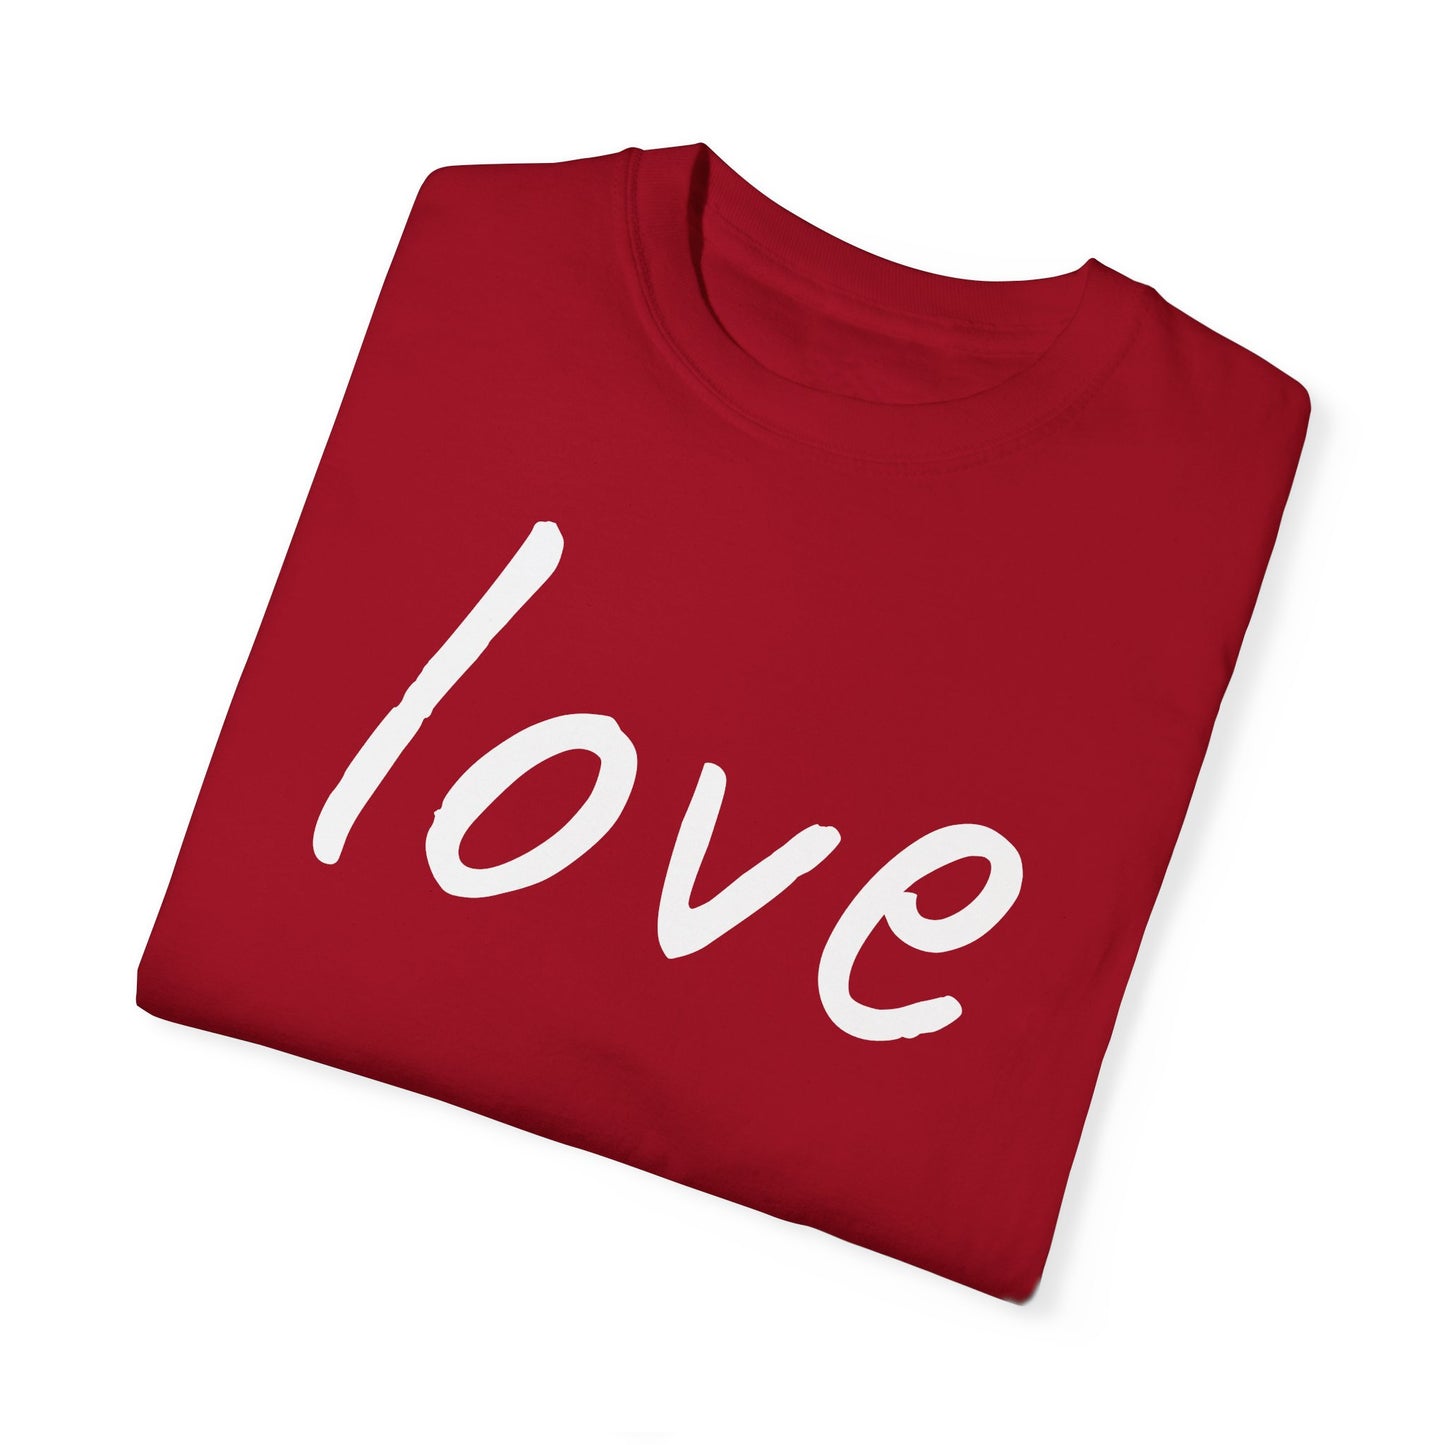 Seasonal (Love/ Unisex Garment-Dyed T-shirt)